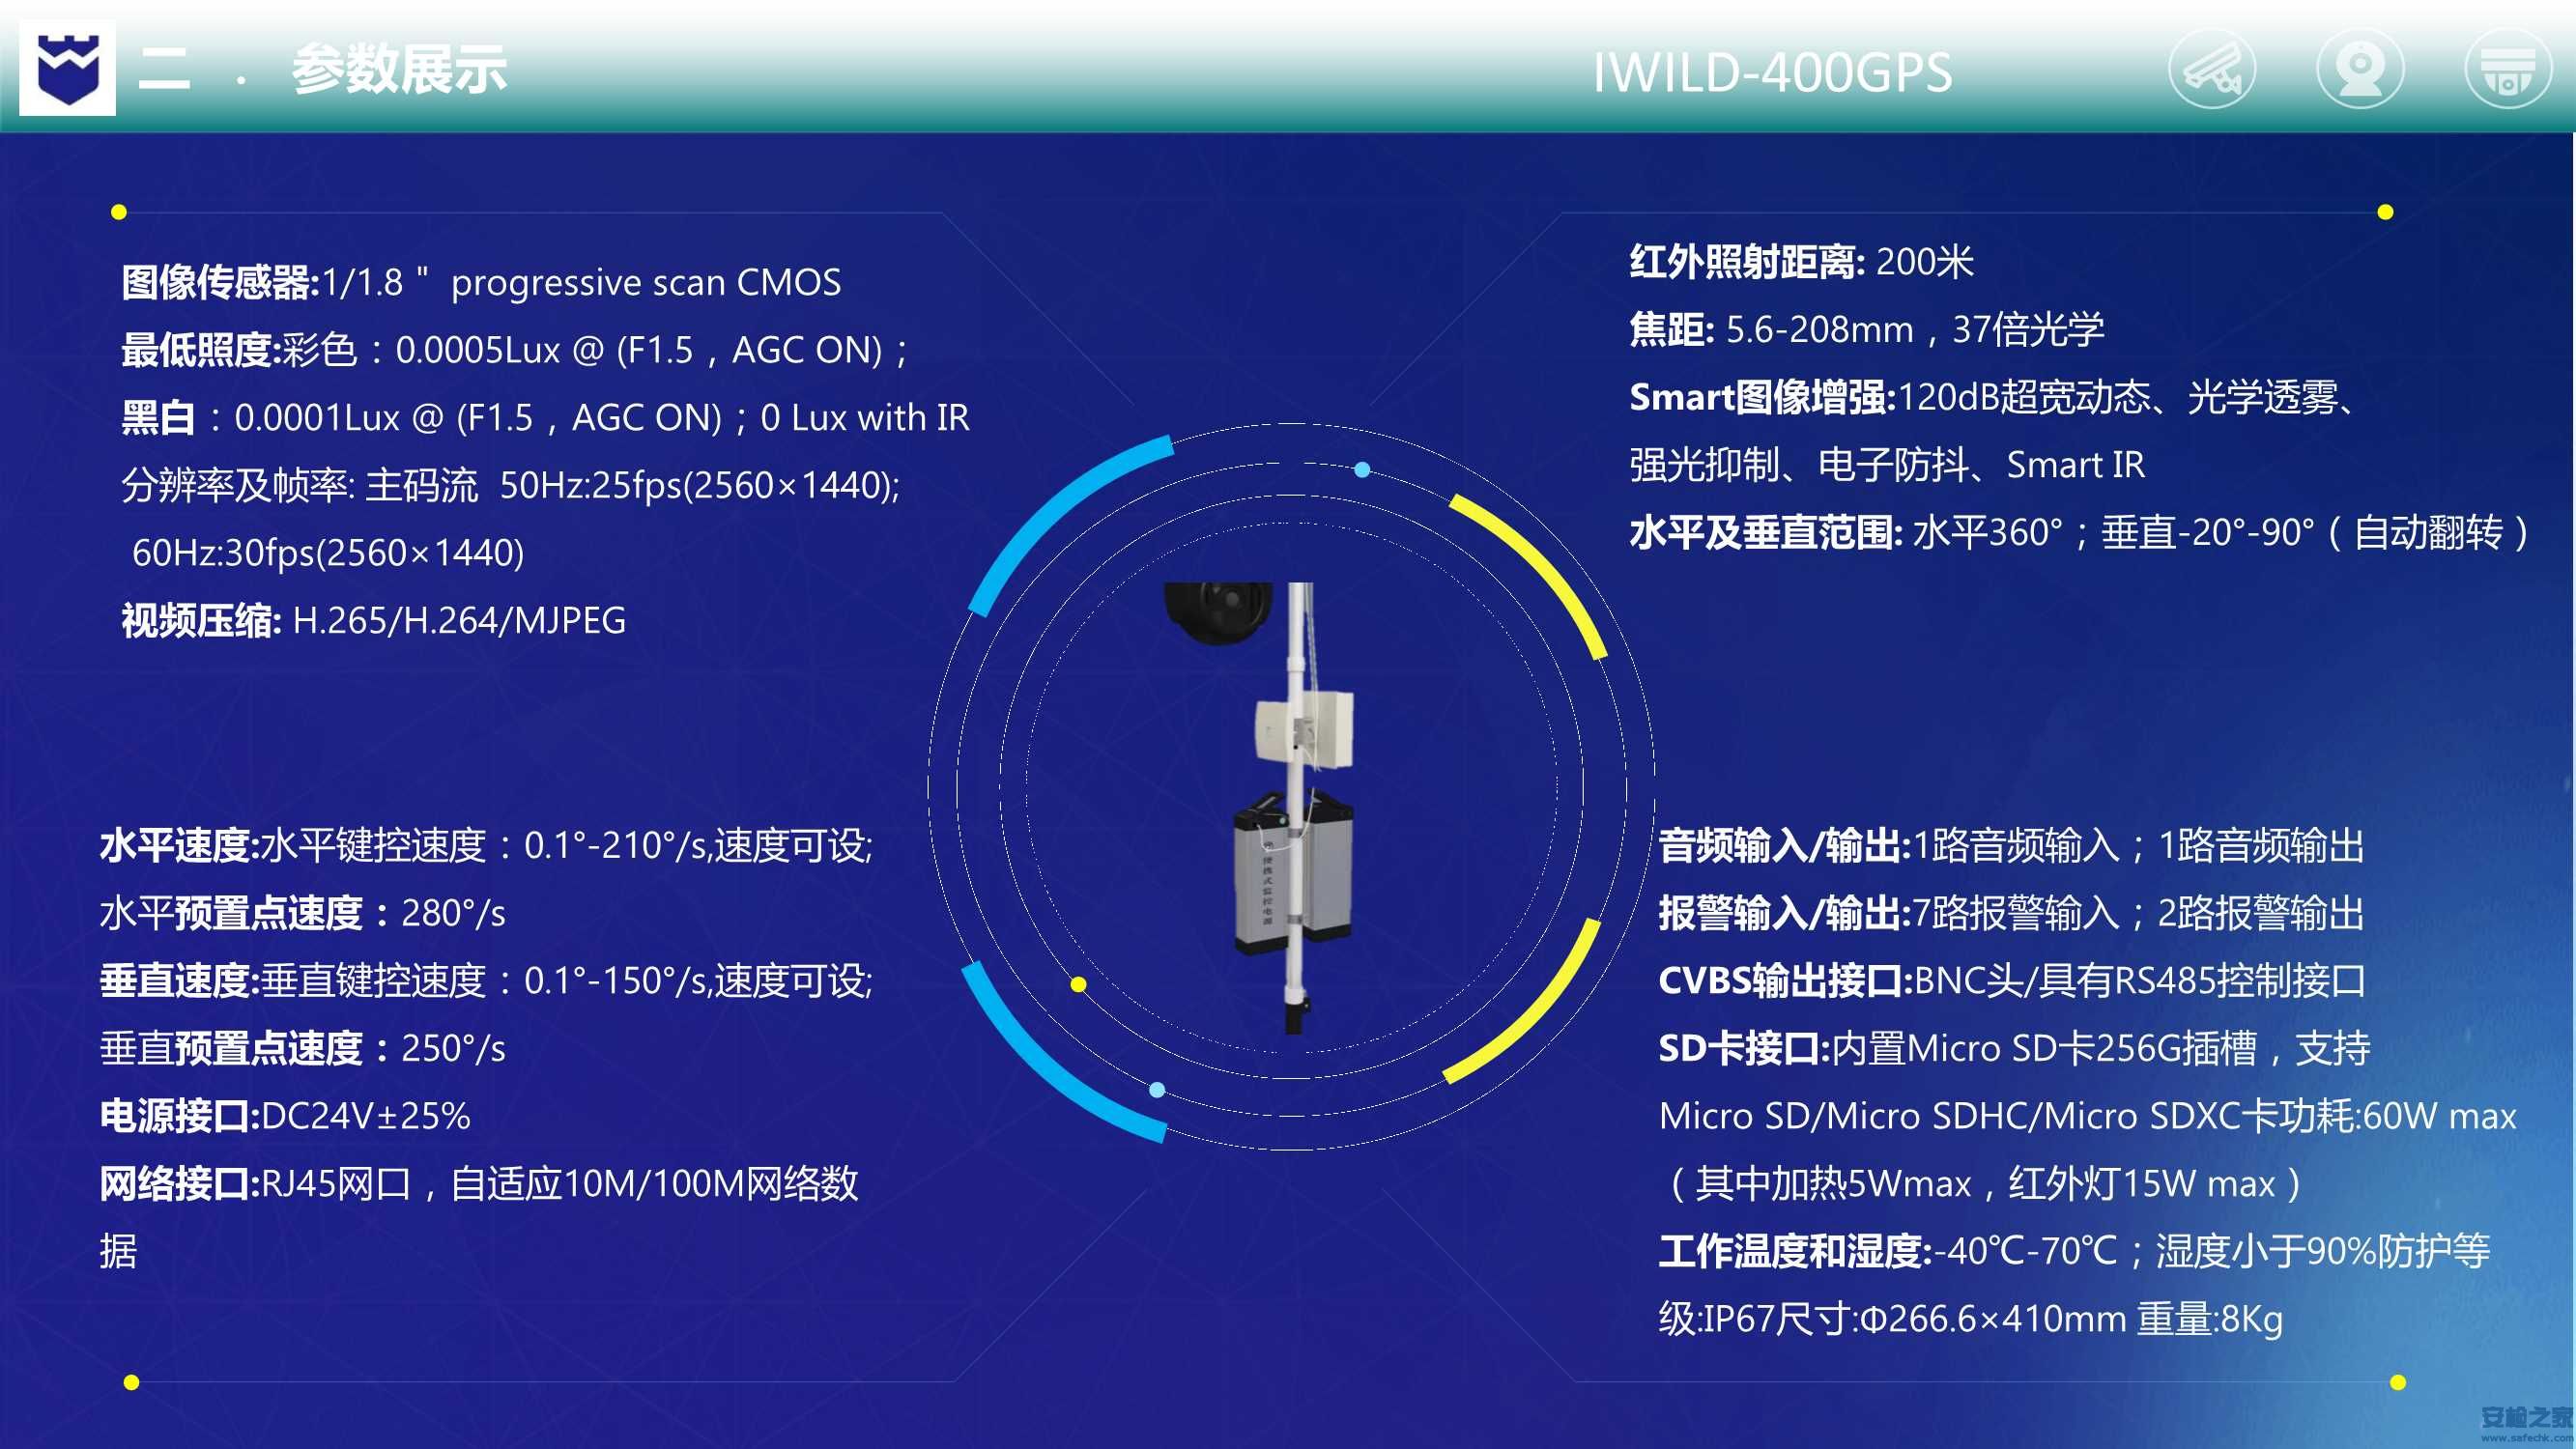 IWILD-400GPS便携式监控布防系统2_4.Jpg